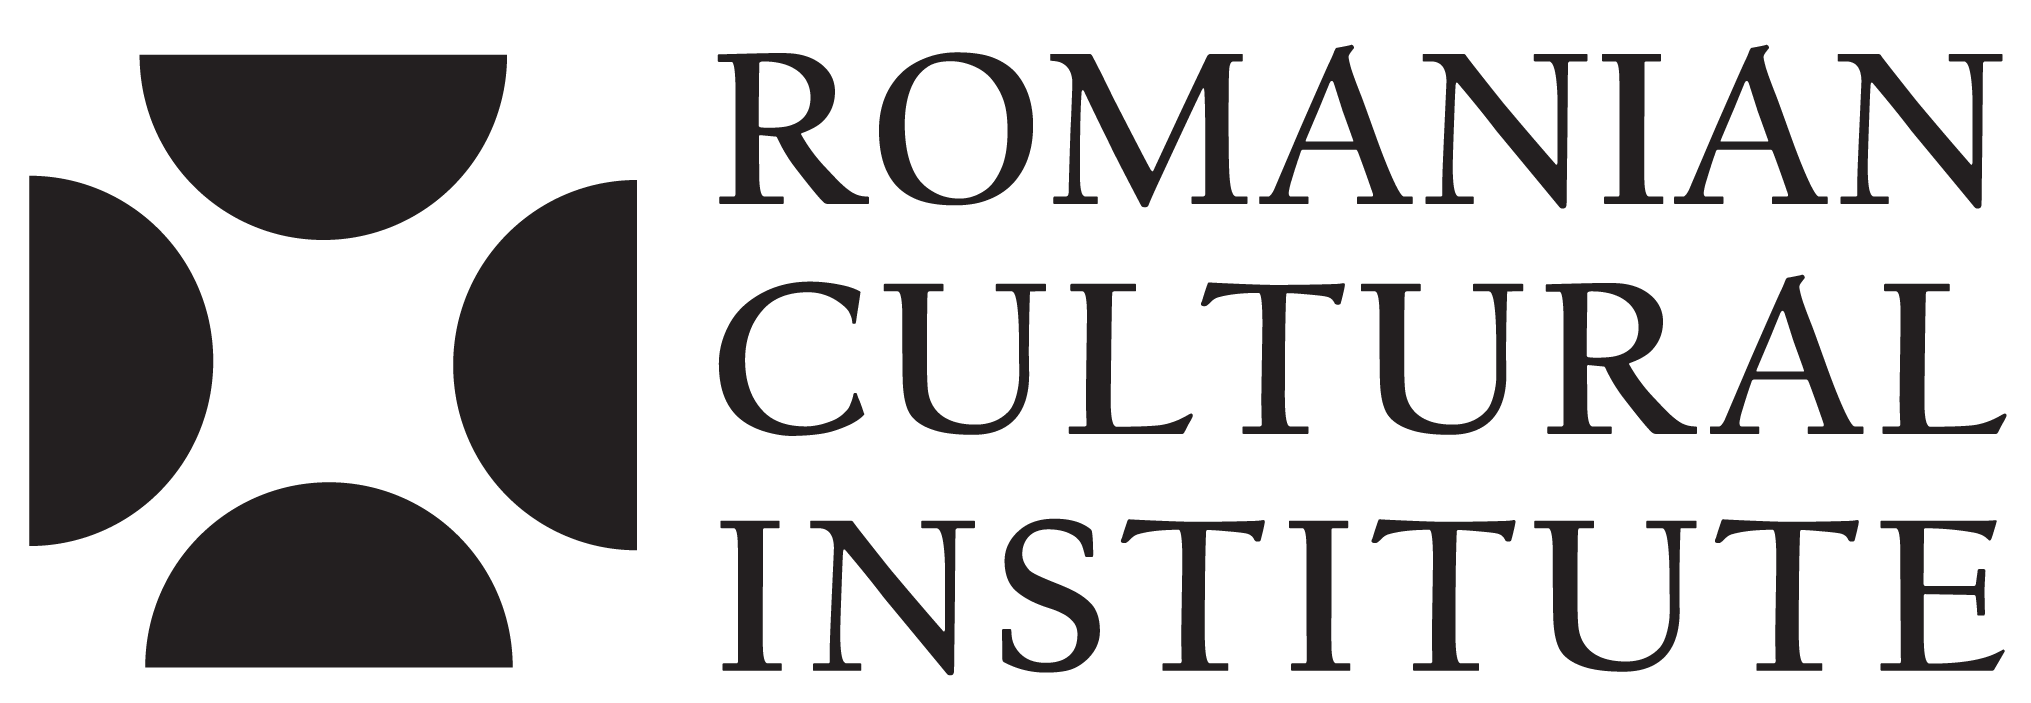 Romanian Cultural Institute logo copy.png